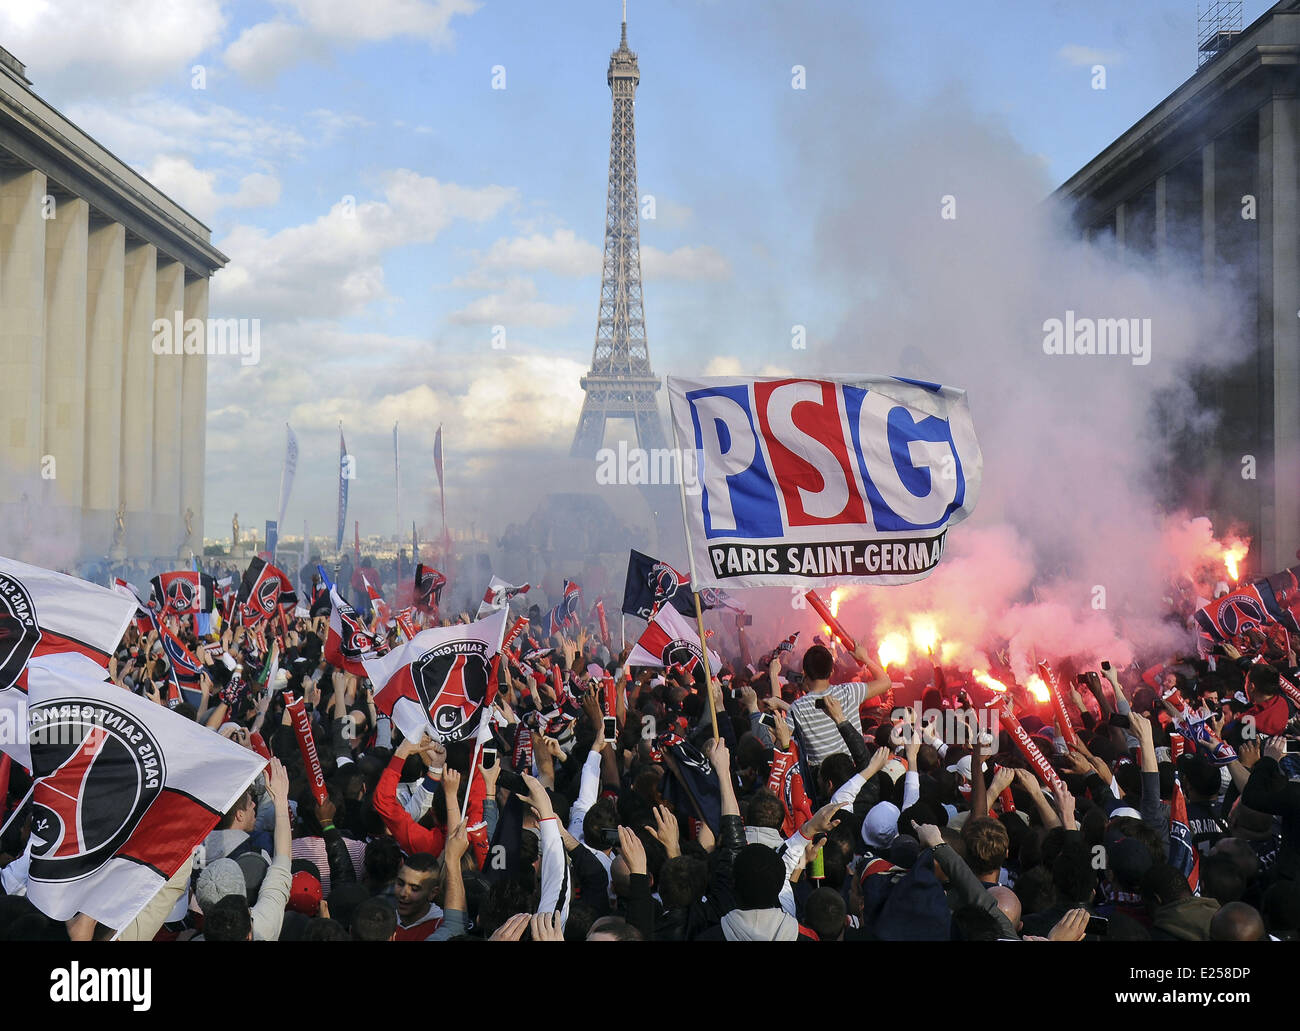 Paris SaintGermain (PSG) supporters descend on the Trocadero to Stock